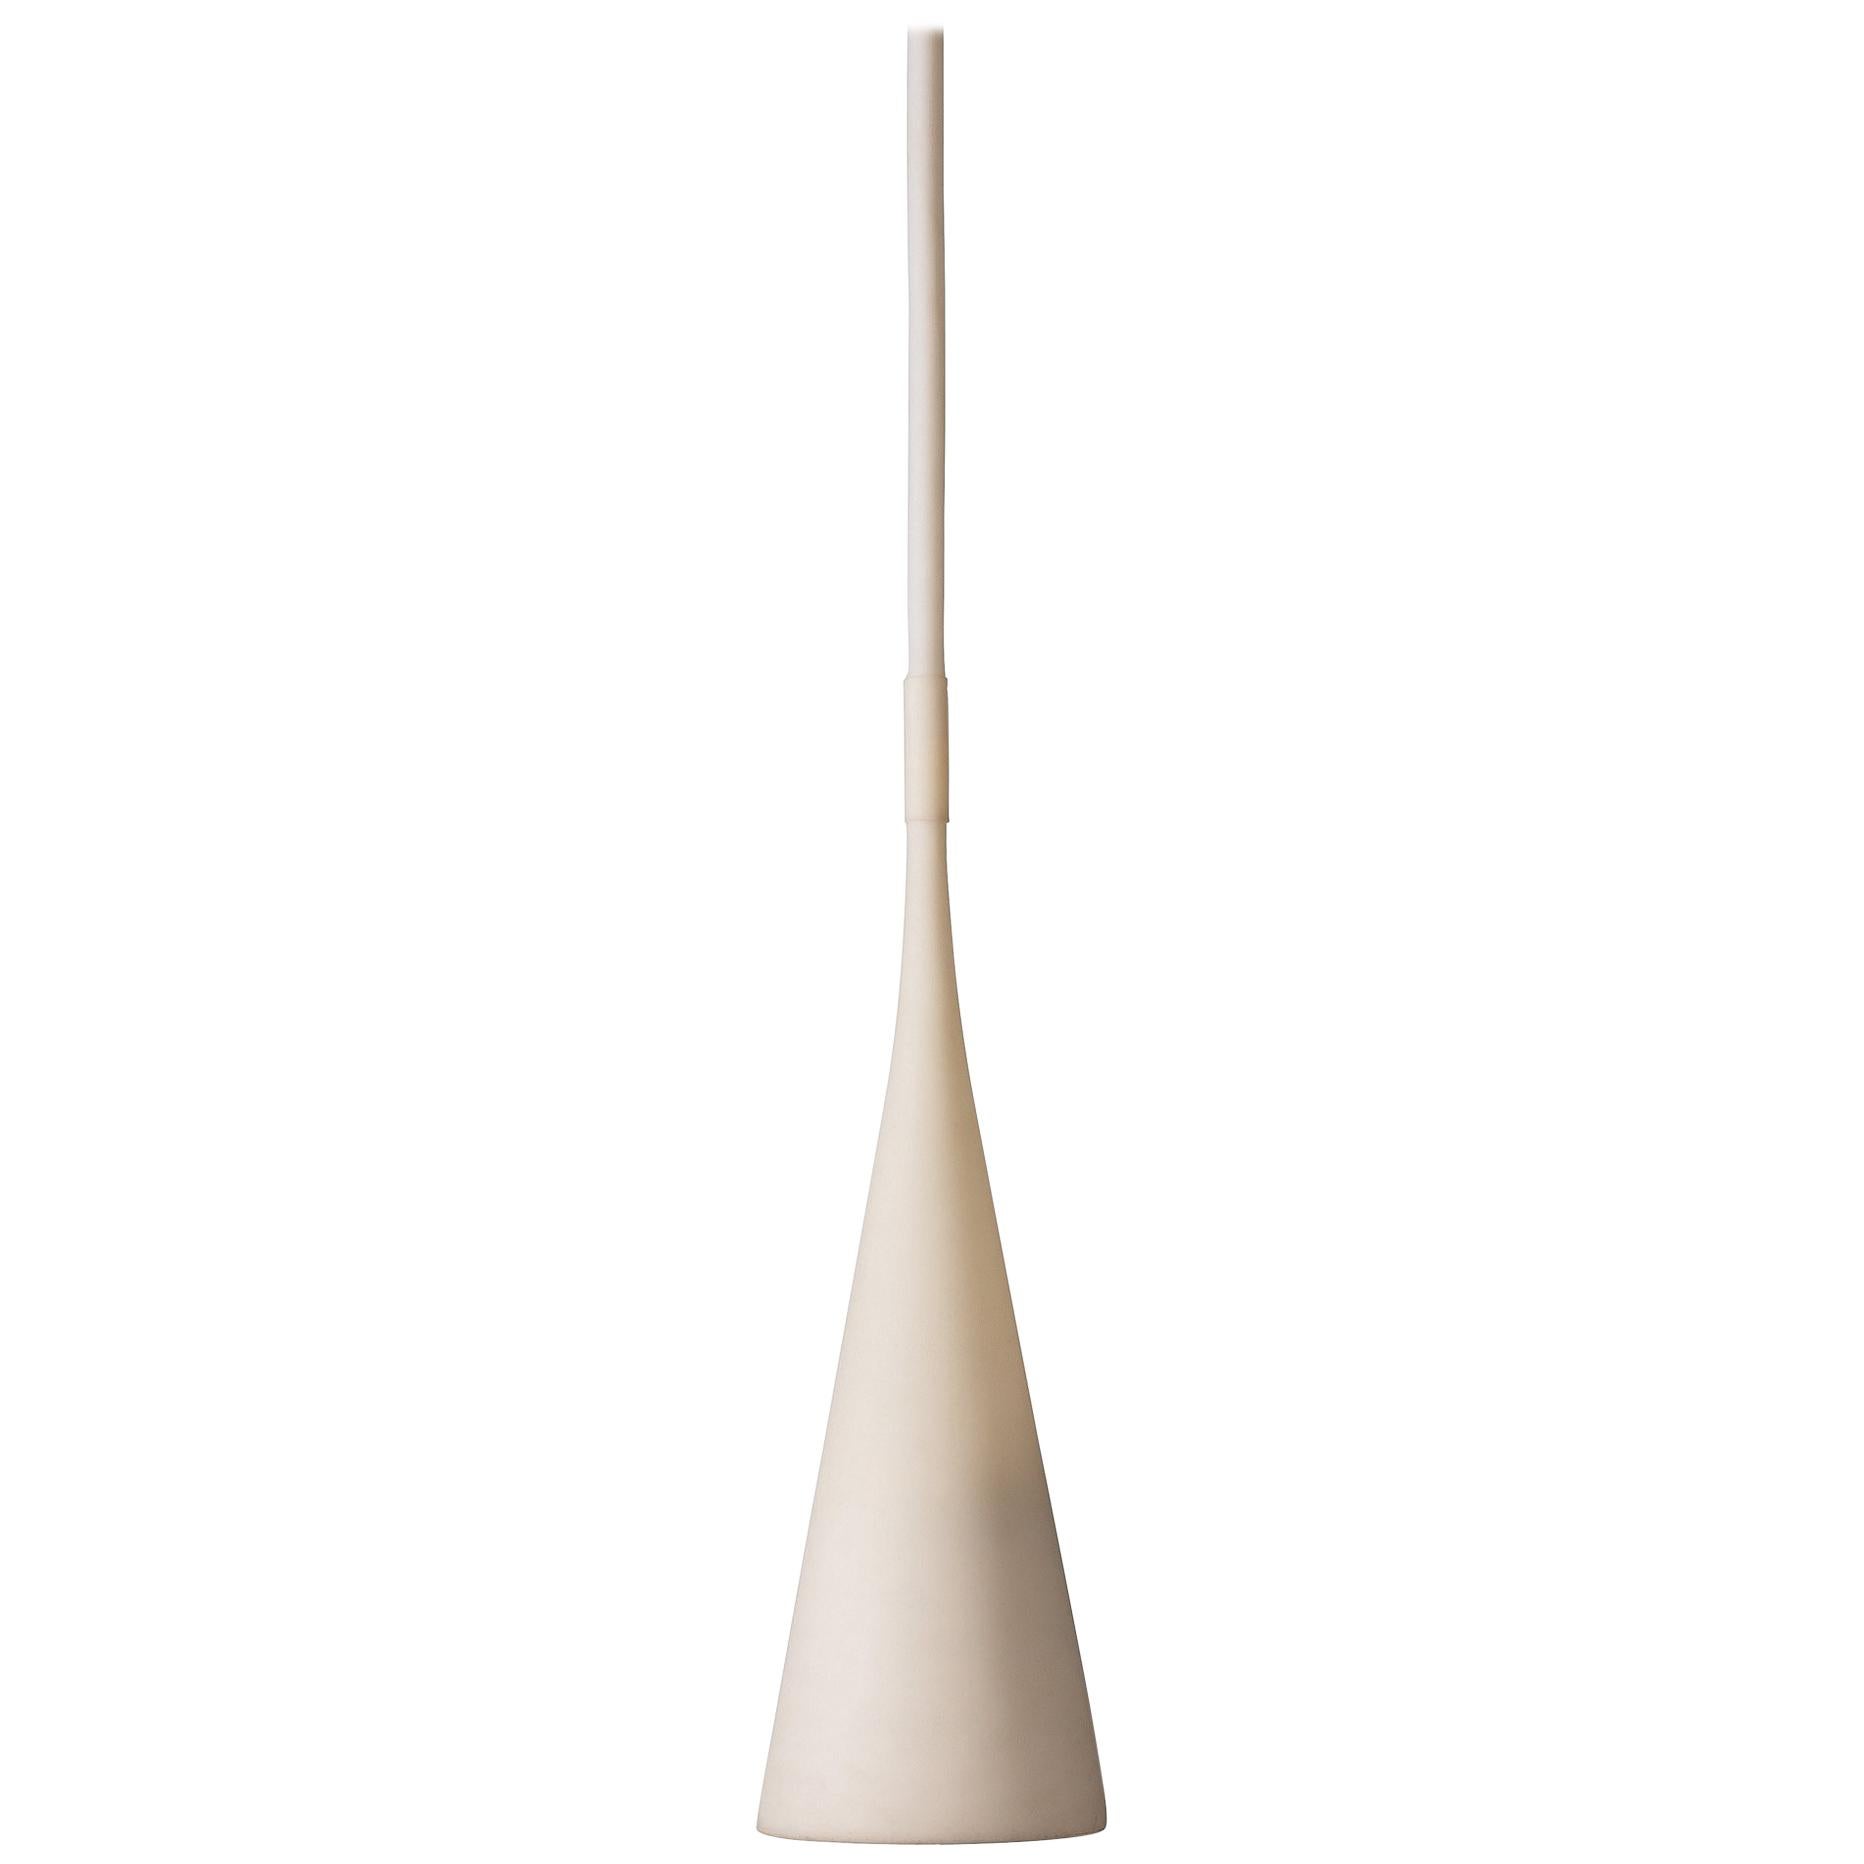 Foscarini UTO Suspension/Table Lamp in White by Lagranja Design For Sale